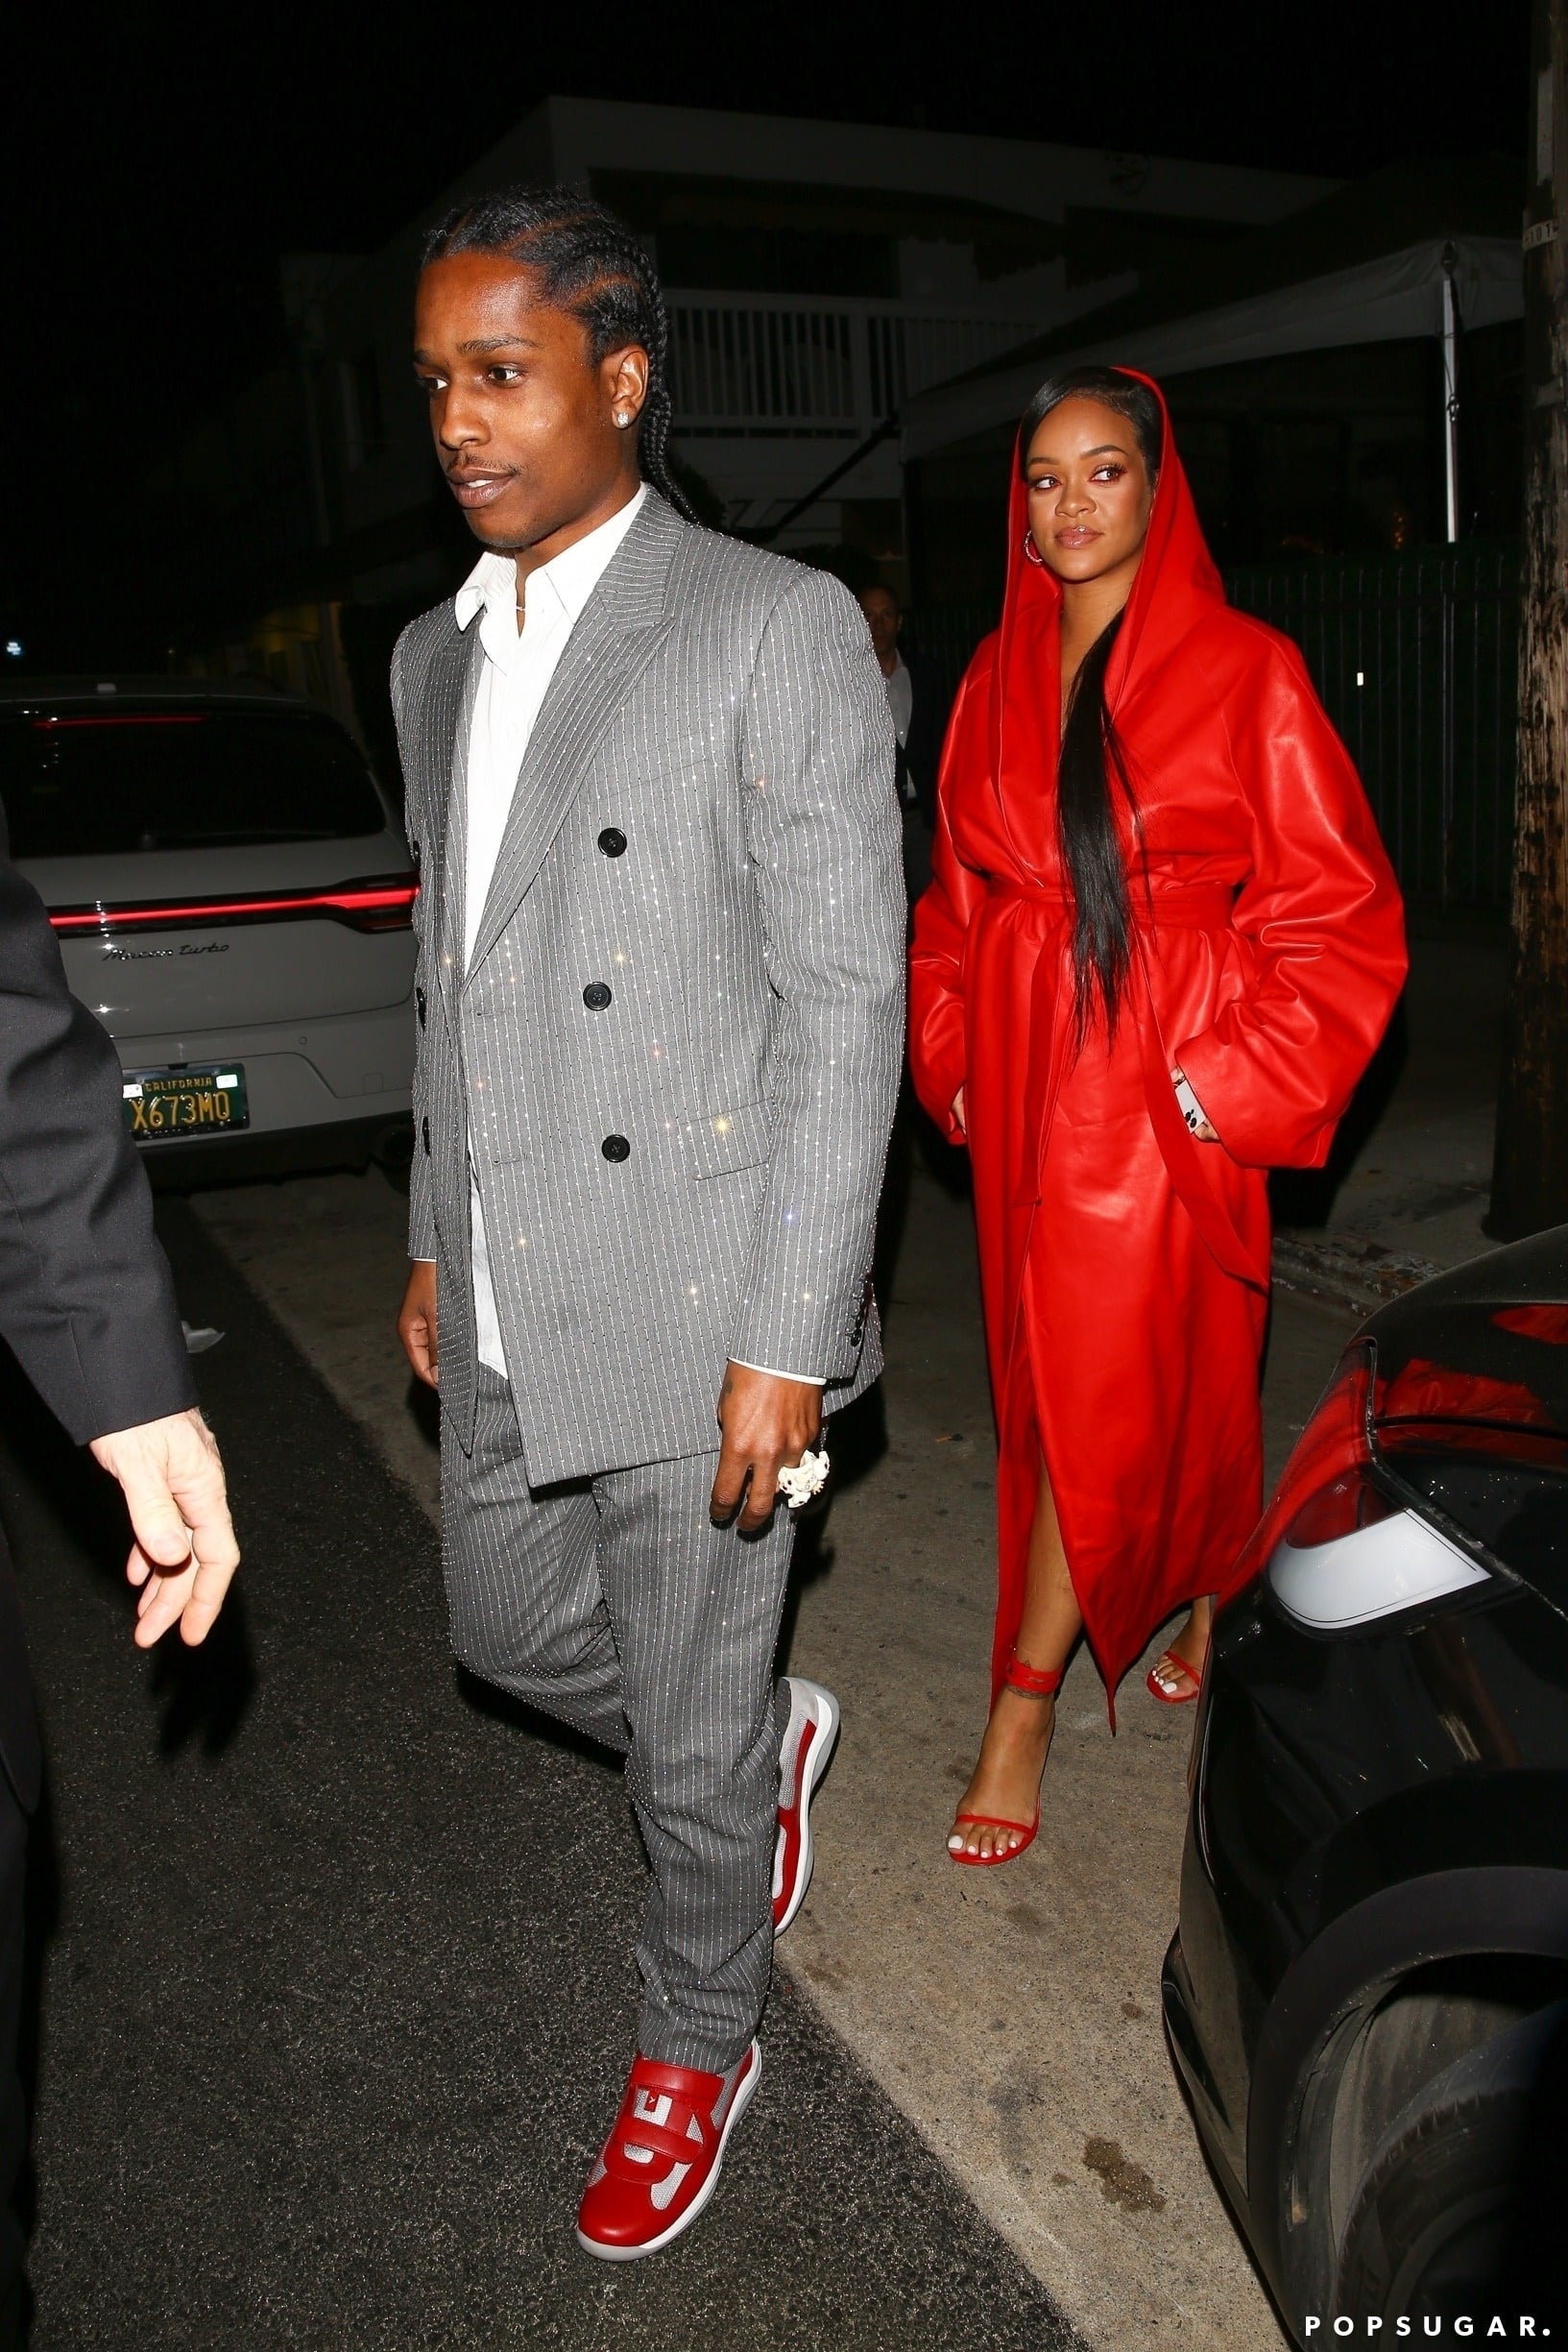 Rihanna, A$AP Rocky Grab Romantic Dinner in Santa Monica